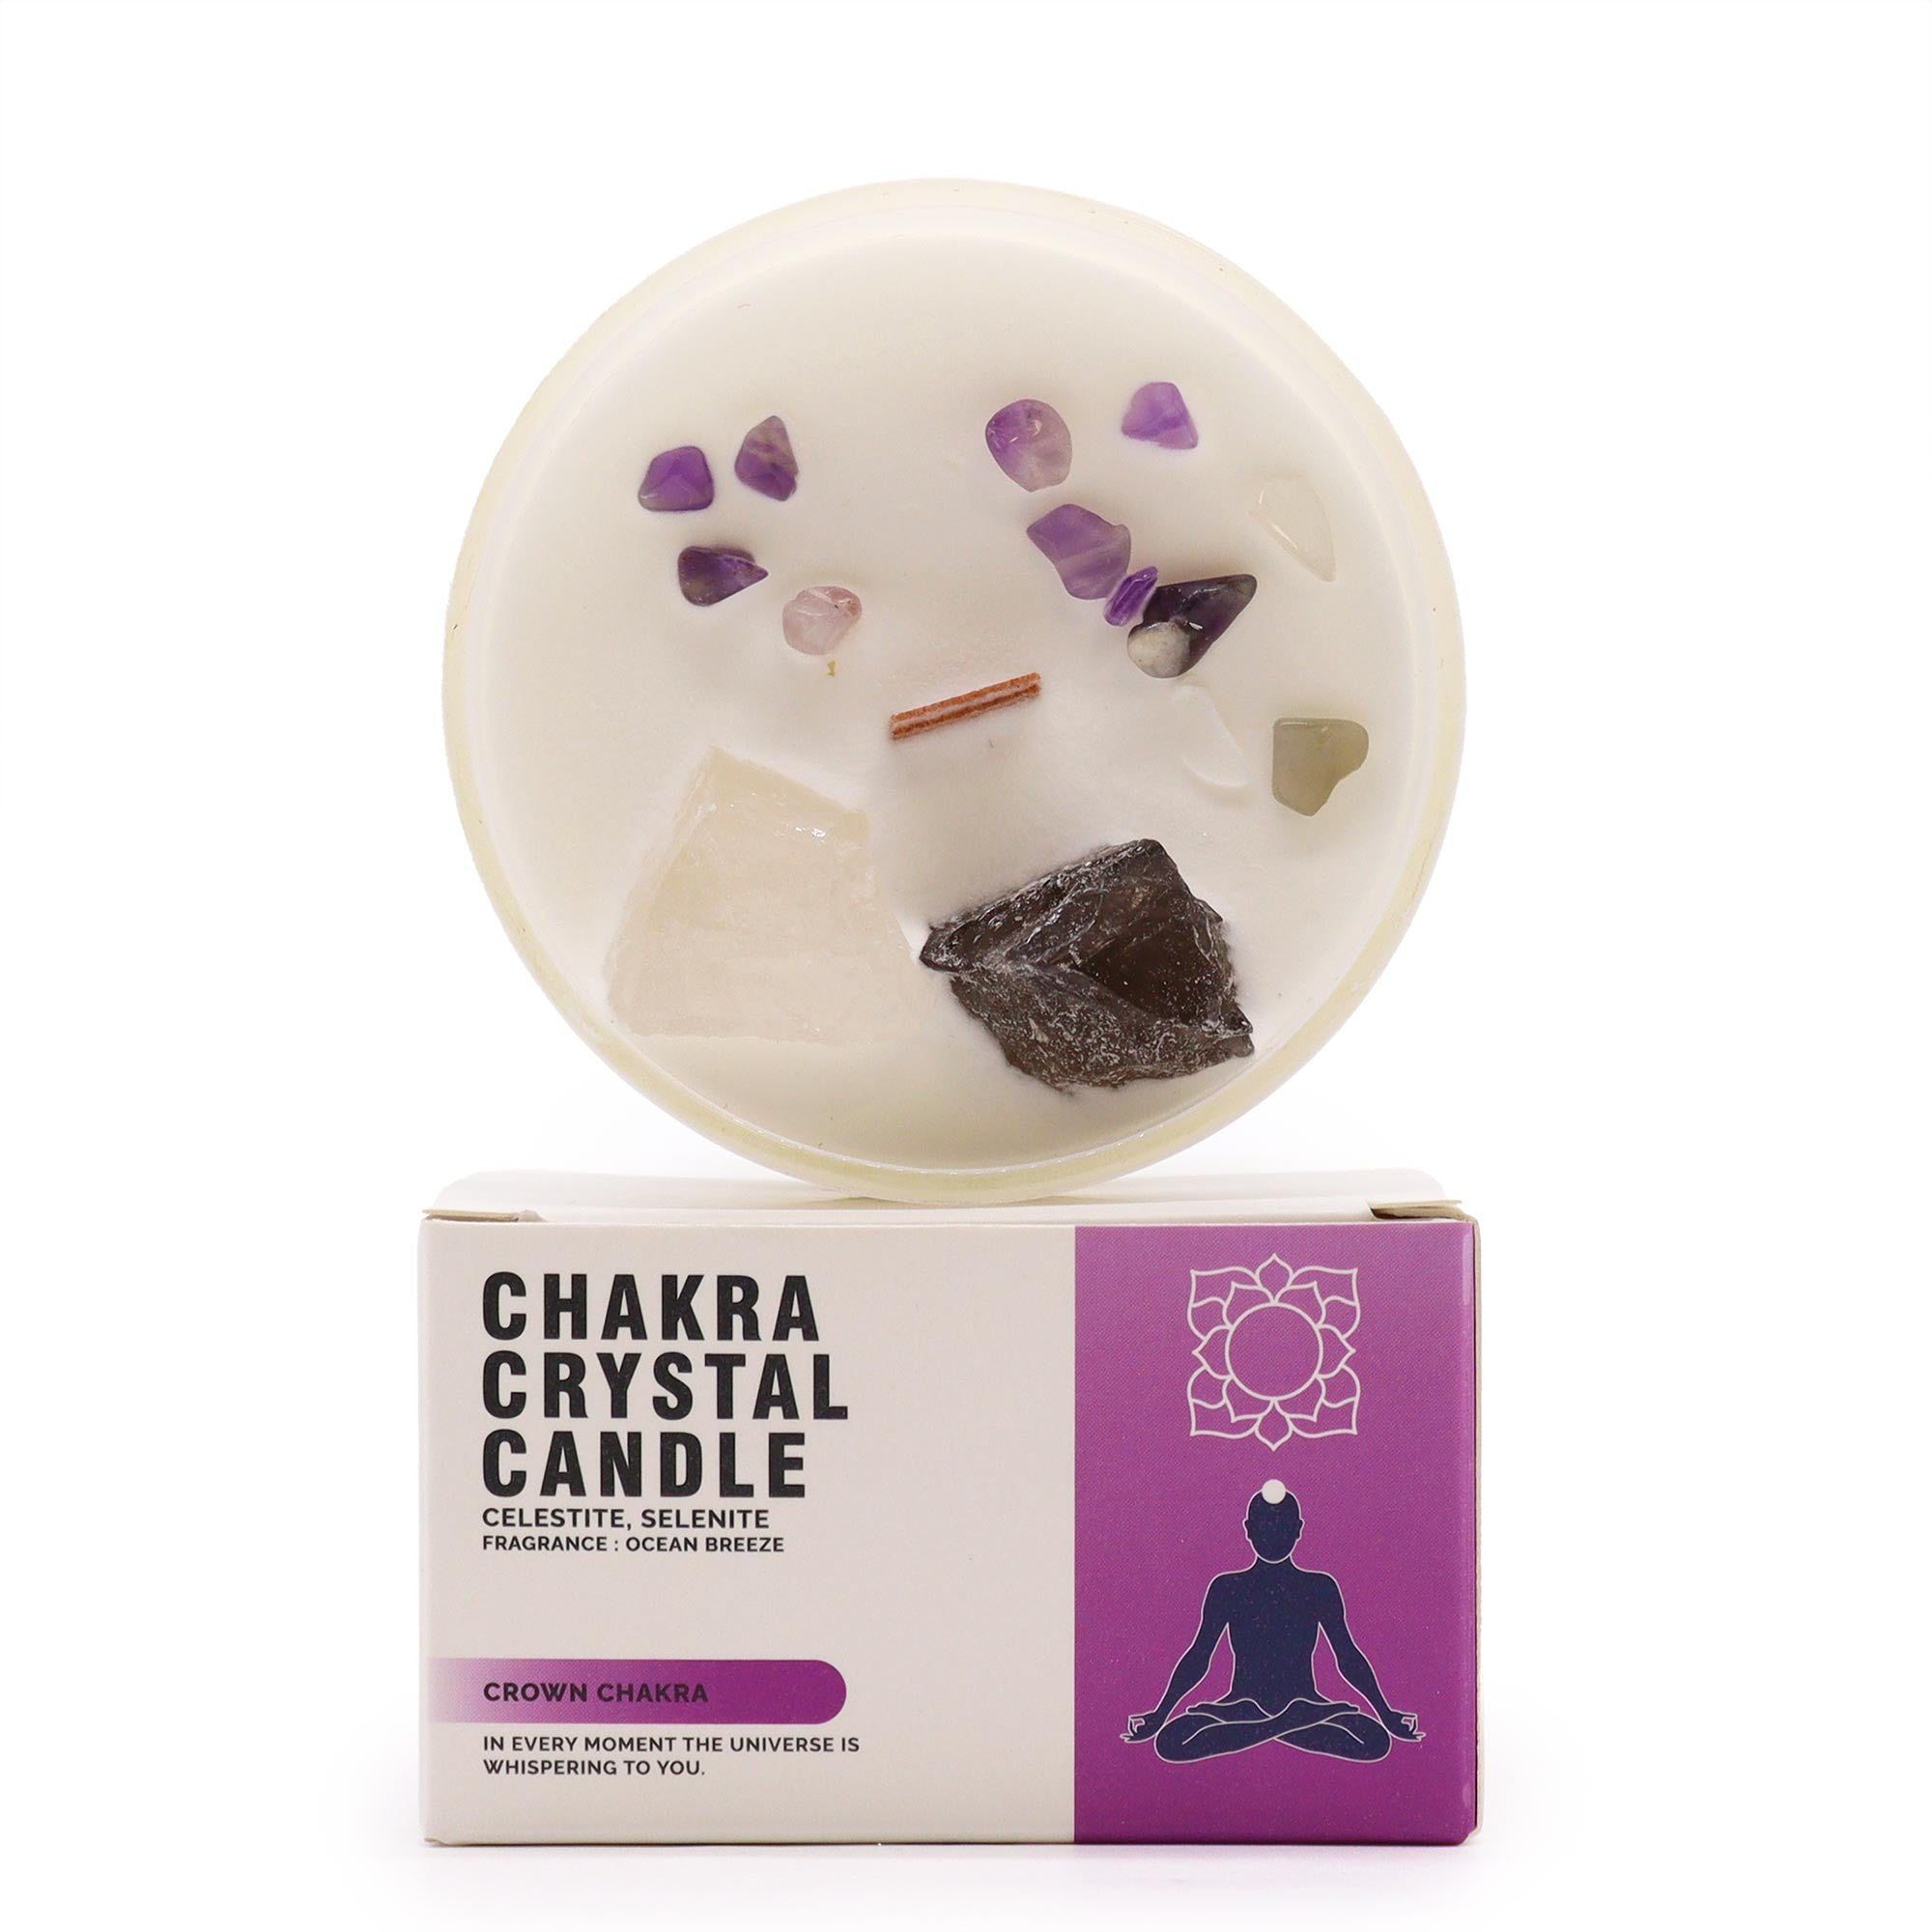 View Chakra Crystal Candles Crown Chakra information